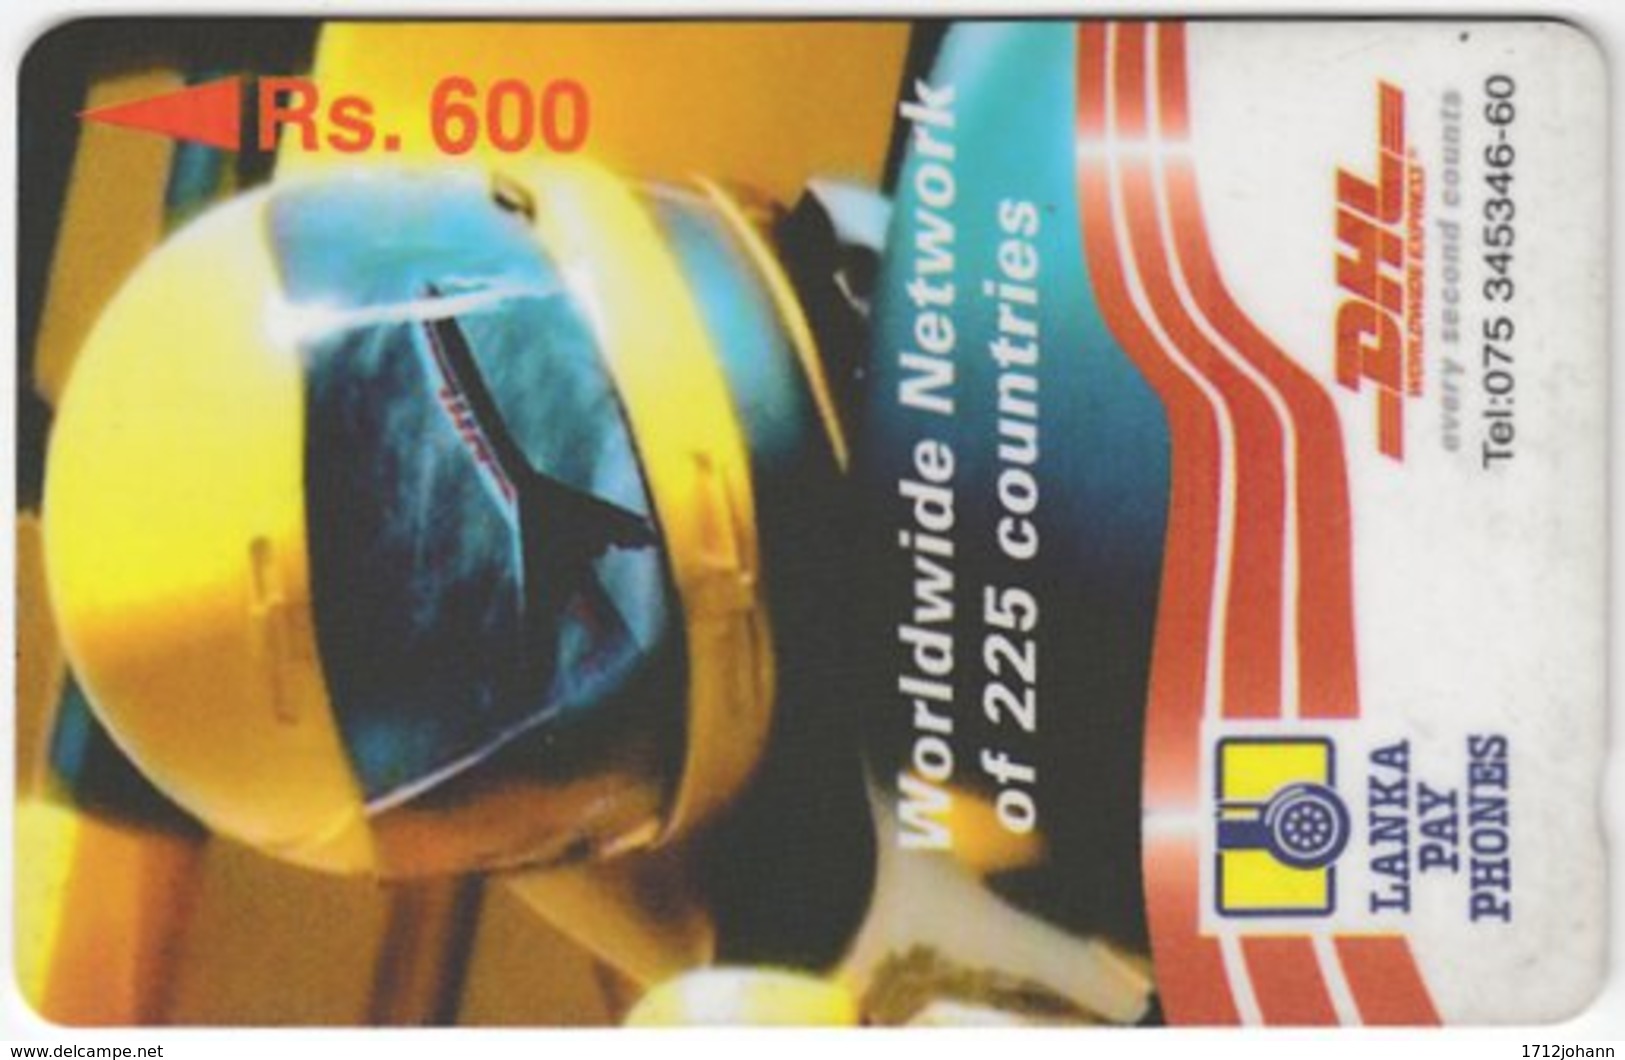 SRI LANKA A-099 Magnetic LankaPayPhones - Advertising, Transport, DHL - 37SRLF - Used - Sri Lanka (Ceylon)